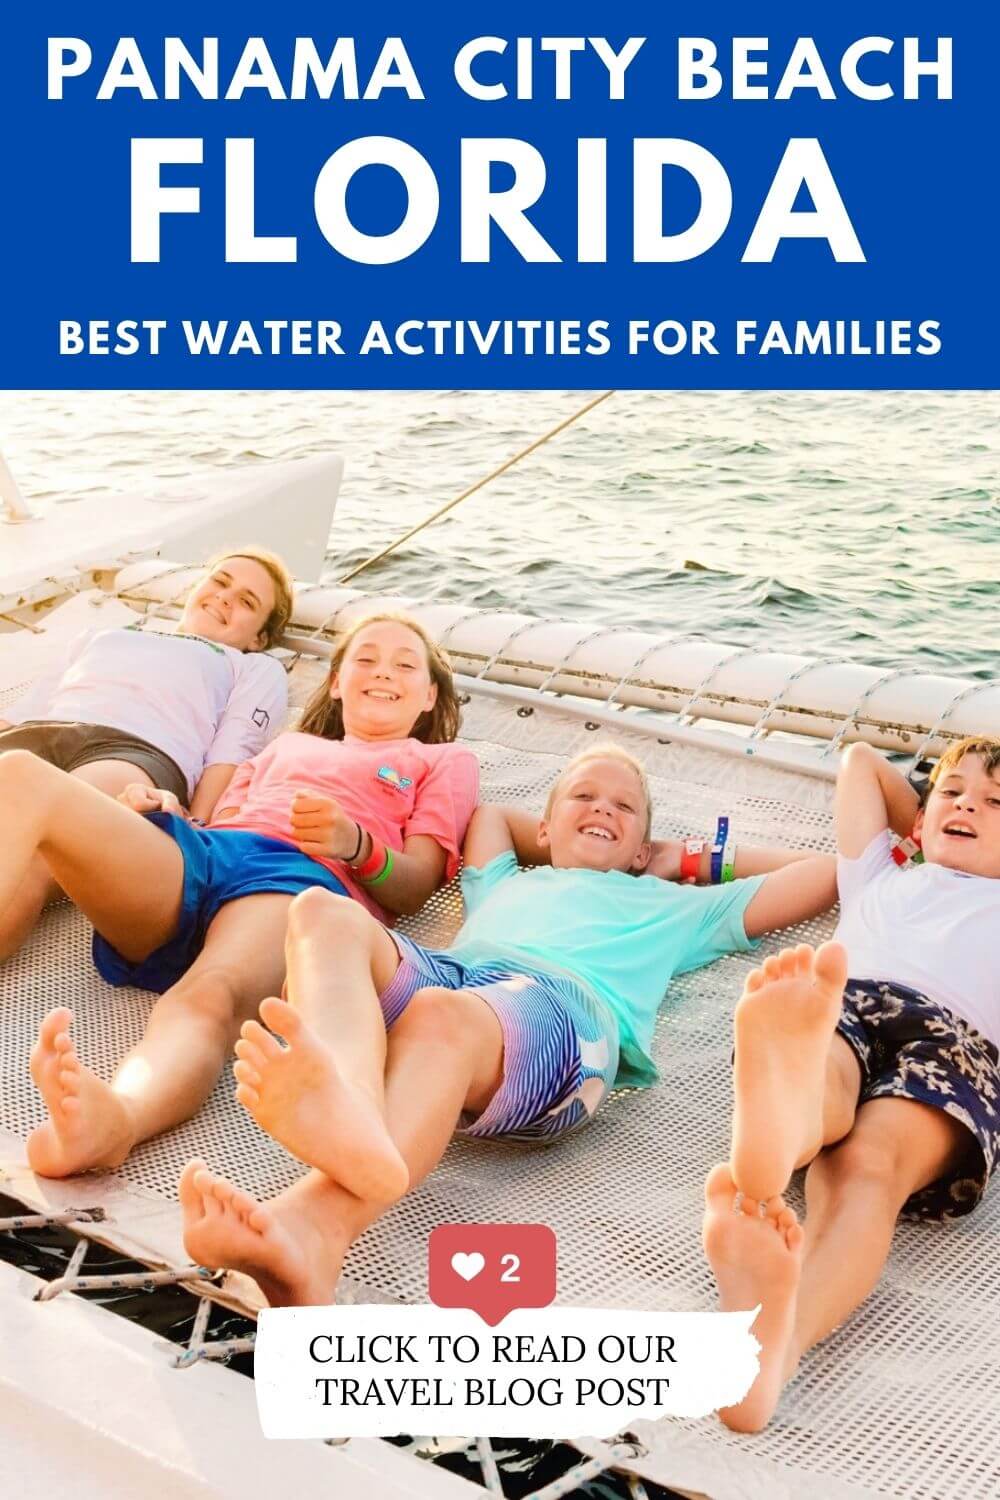 Best Panama City Beach Water Activities with Kids